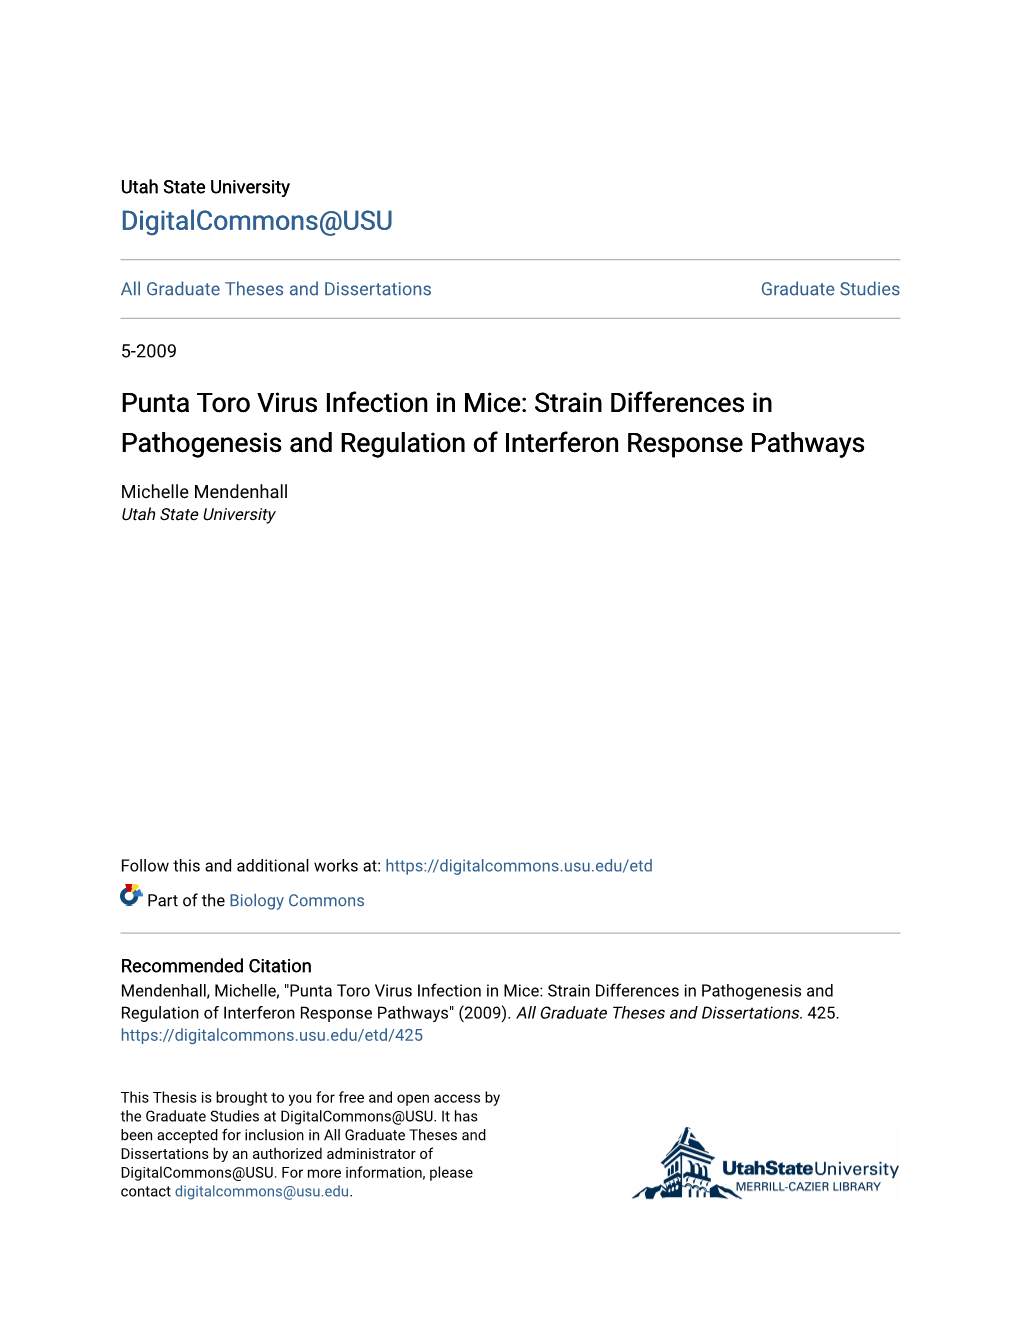 Punta Toro Virus Infection in Mice: Strain Differences in Pathogenesis and Regulation of Interferon Response Pathways